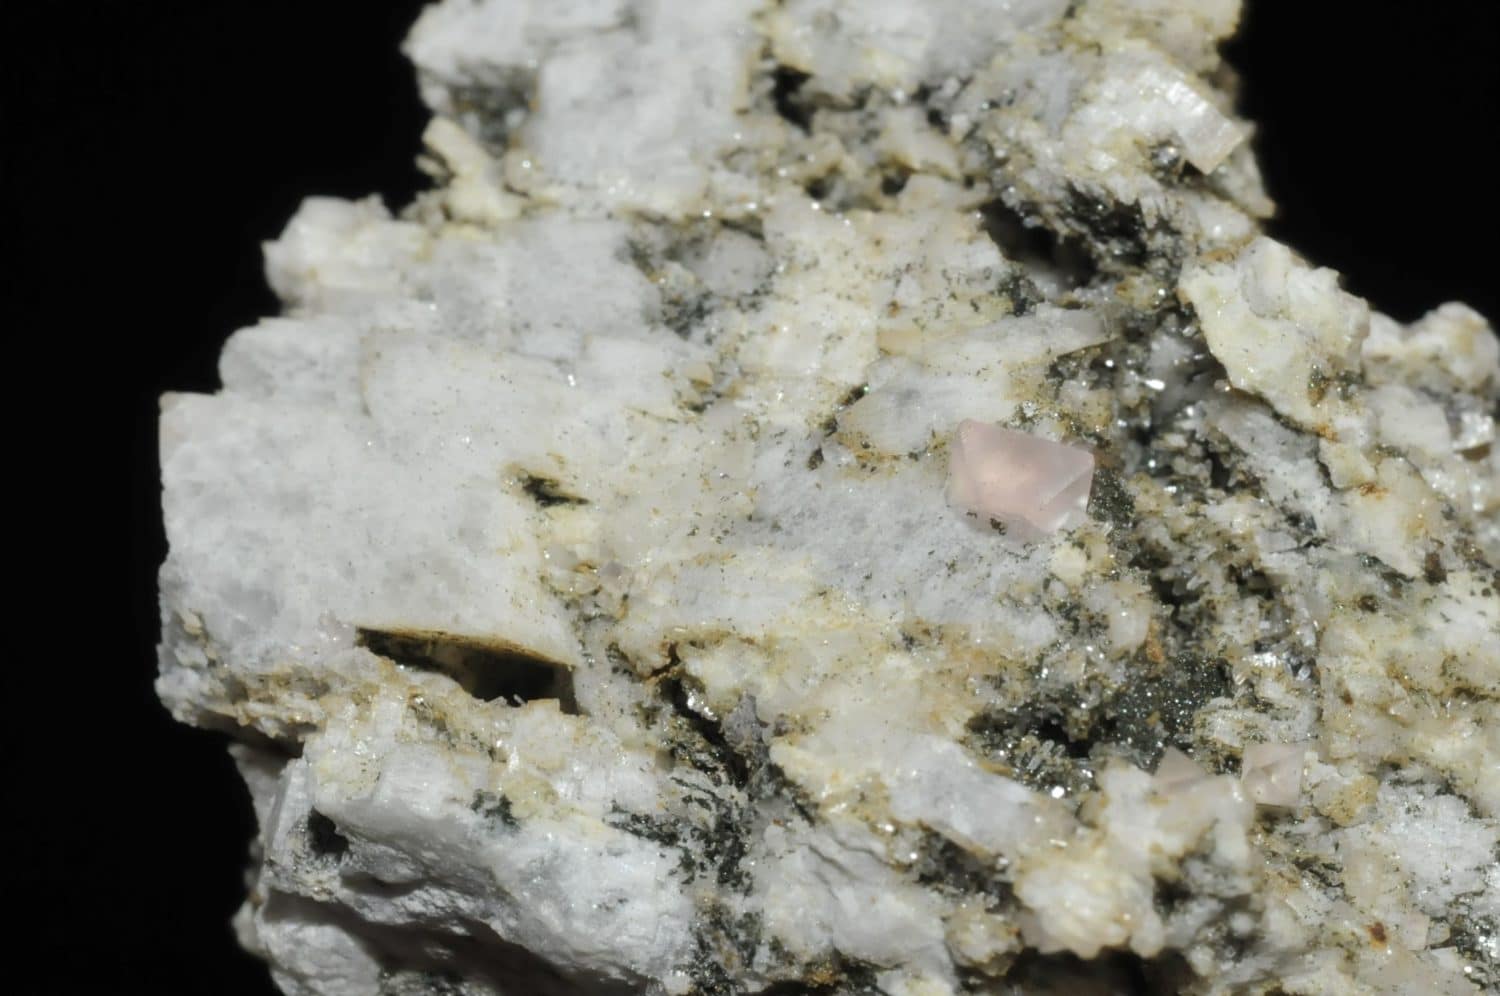 Fluorite rose du Mont-Blanc (Chamonix - Haute-Savoie).